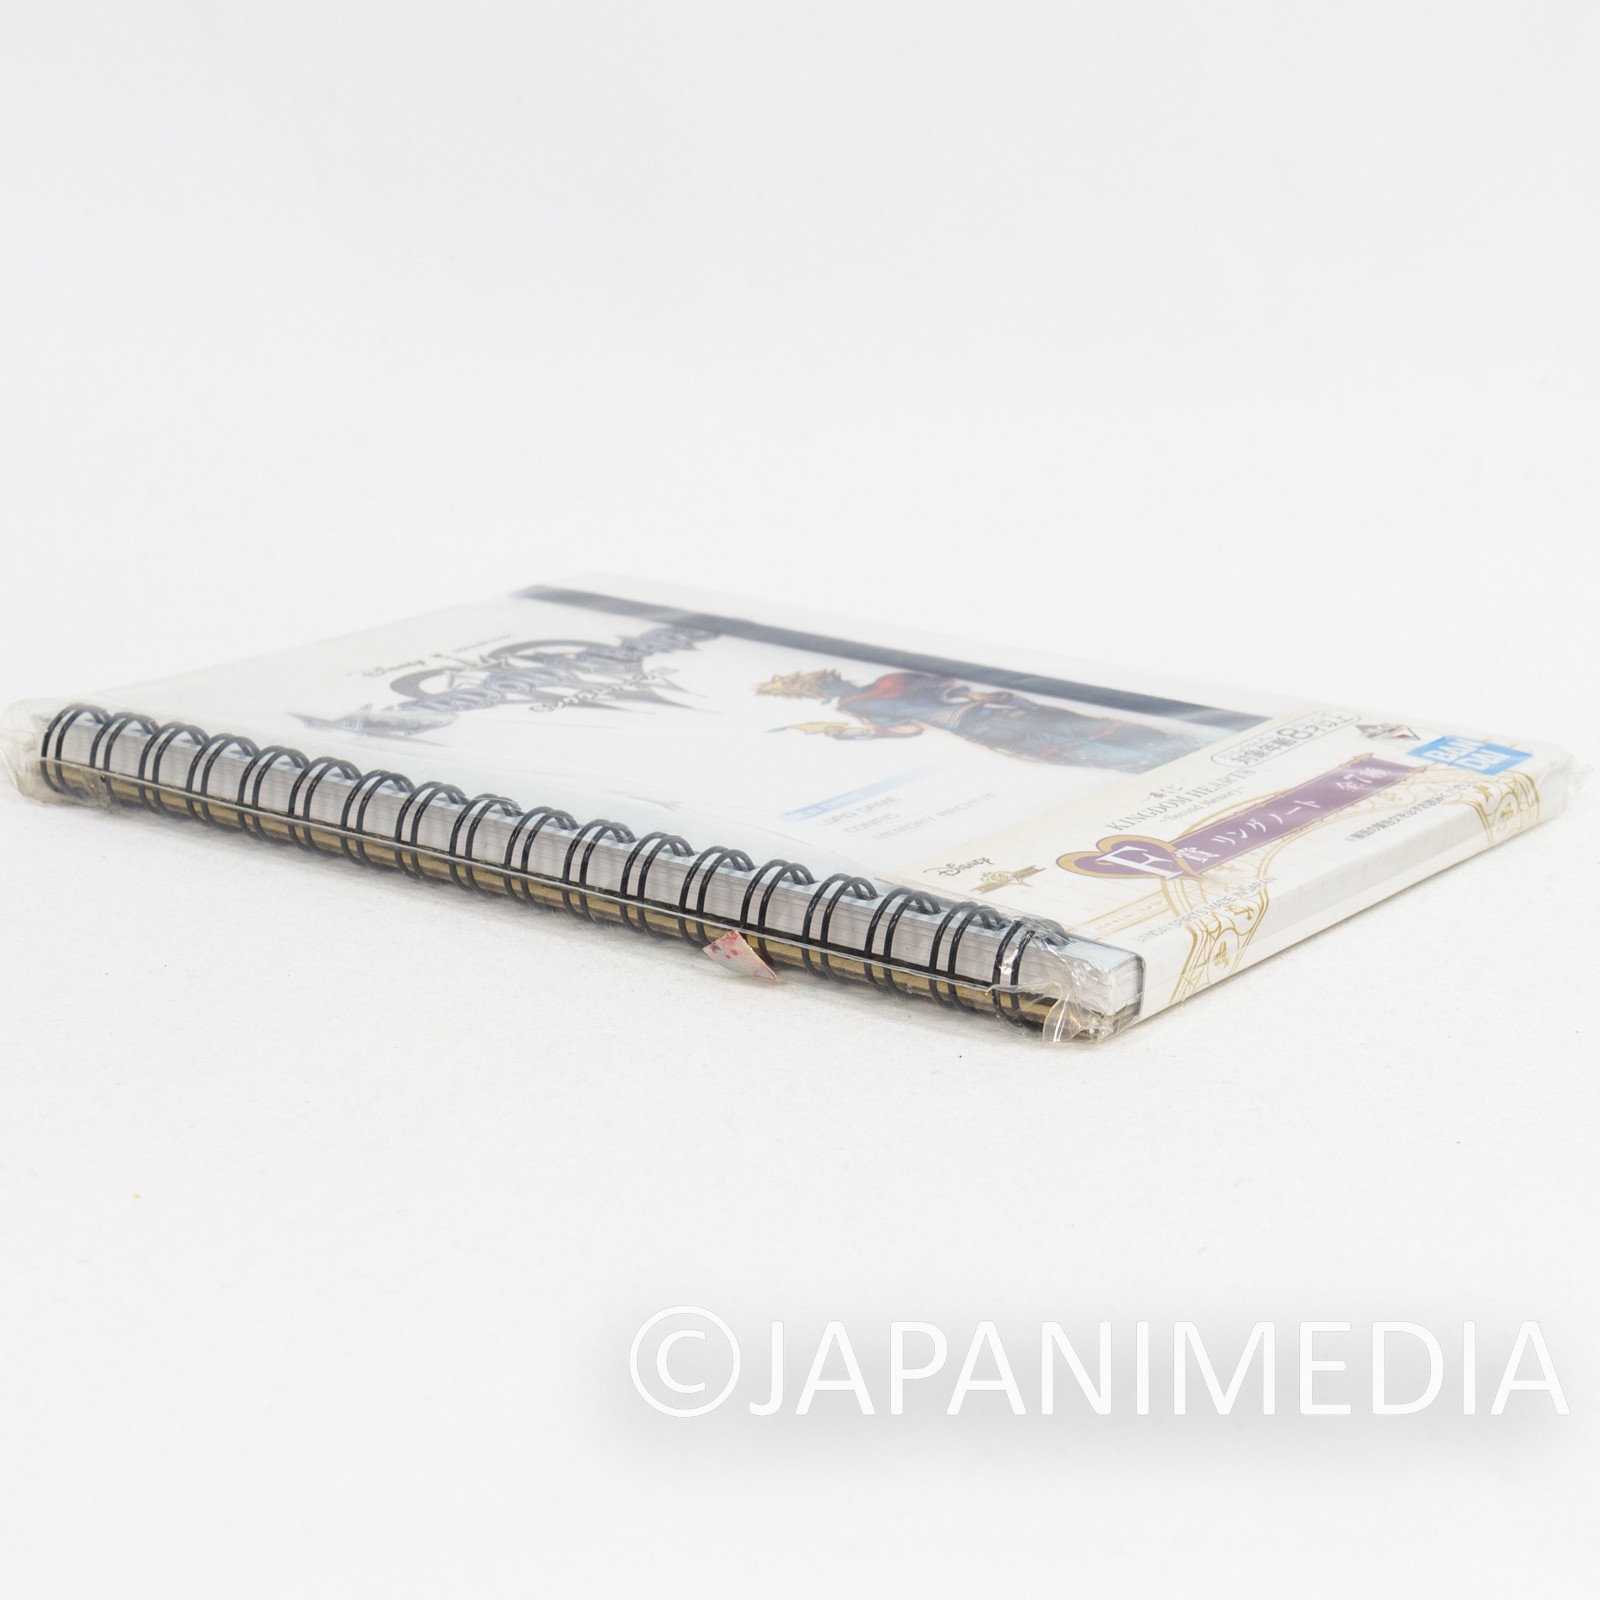 Kingdom Hearts Ring Notebook #3 BANDAI JAPAN GAME SQUARE ENIX